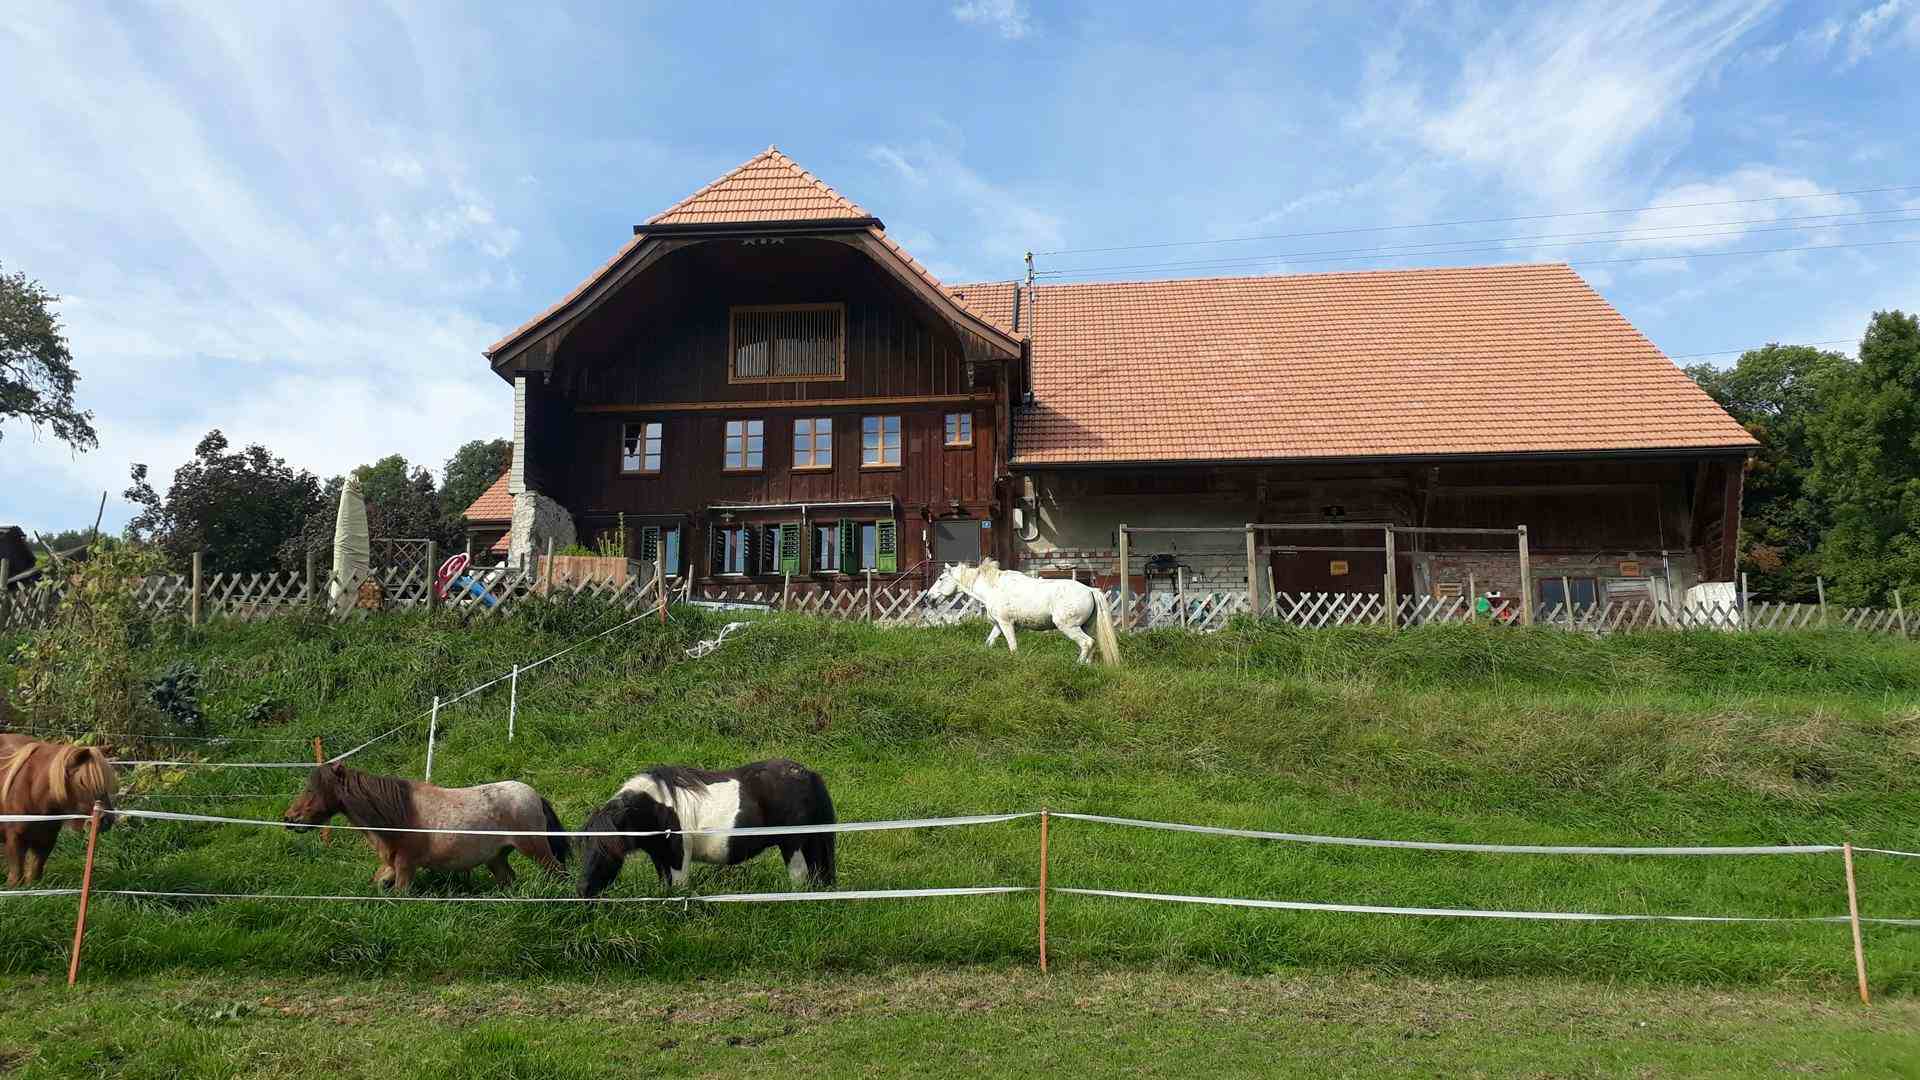 Knubel, producer in Zweisimmen canton of Berne in Switzerland